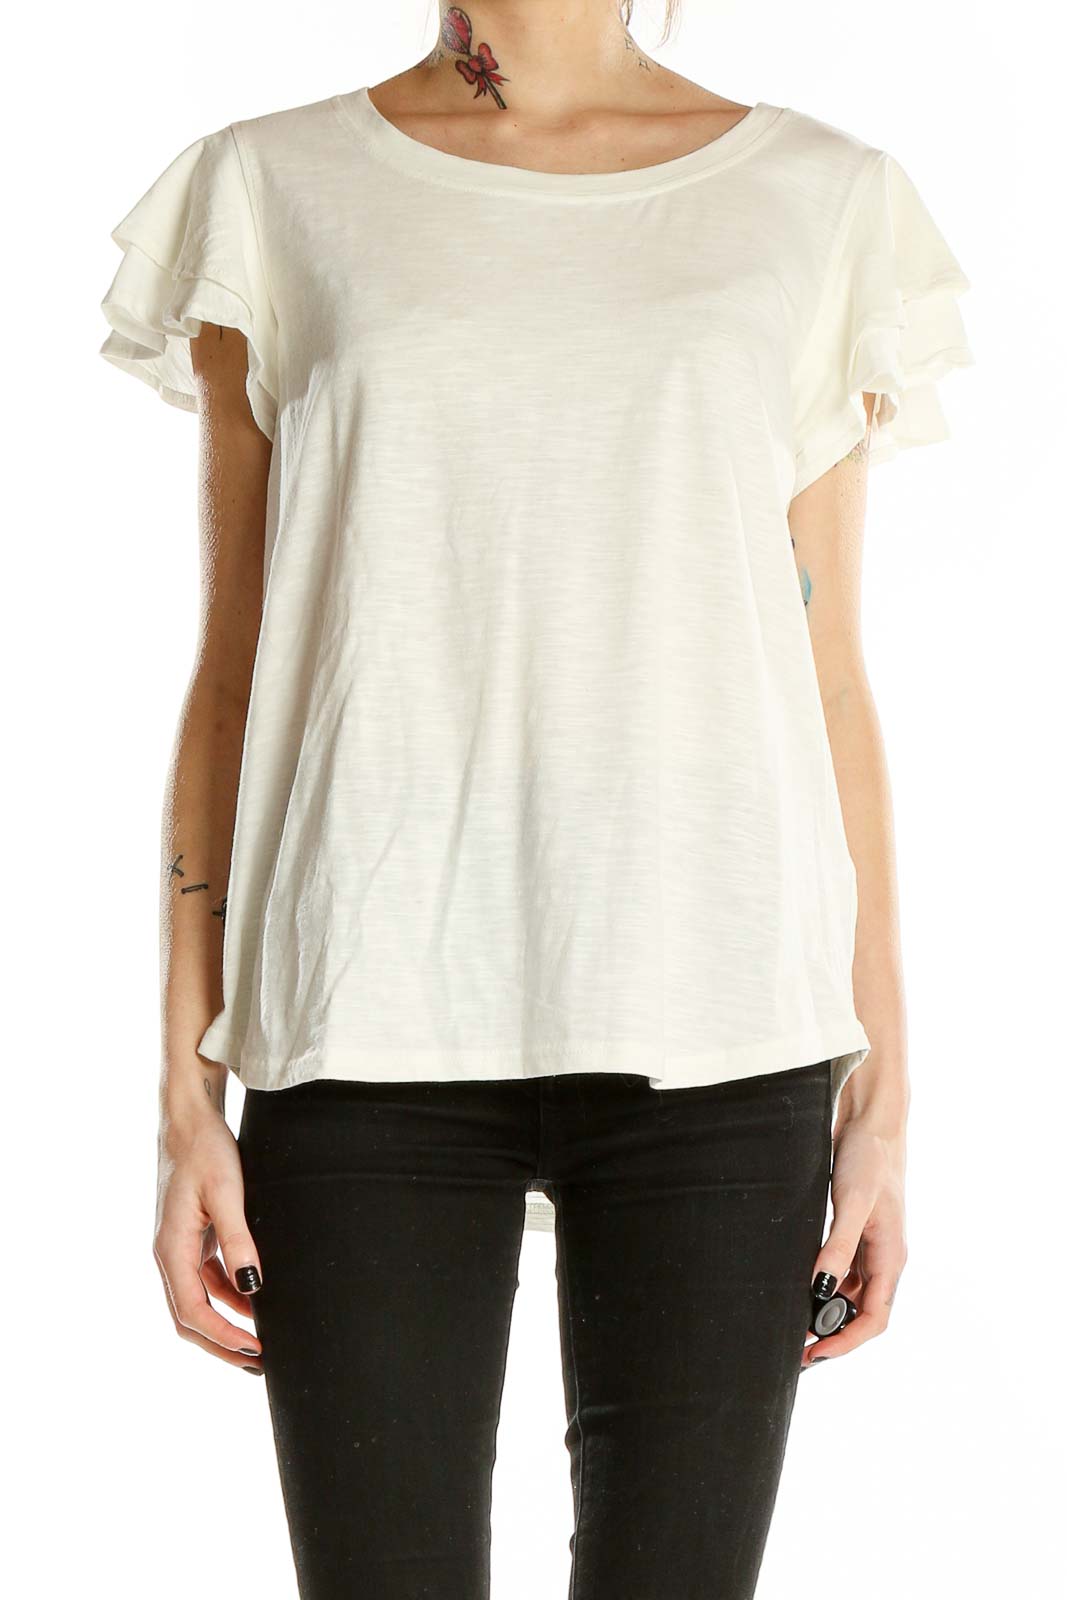 White Short Sleeve T-Shirt Front